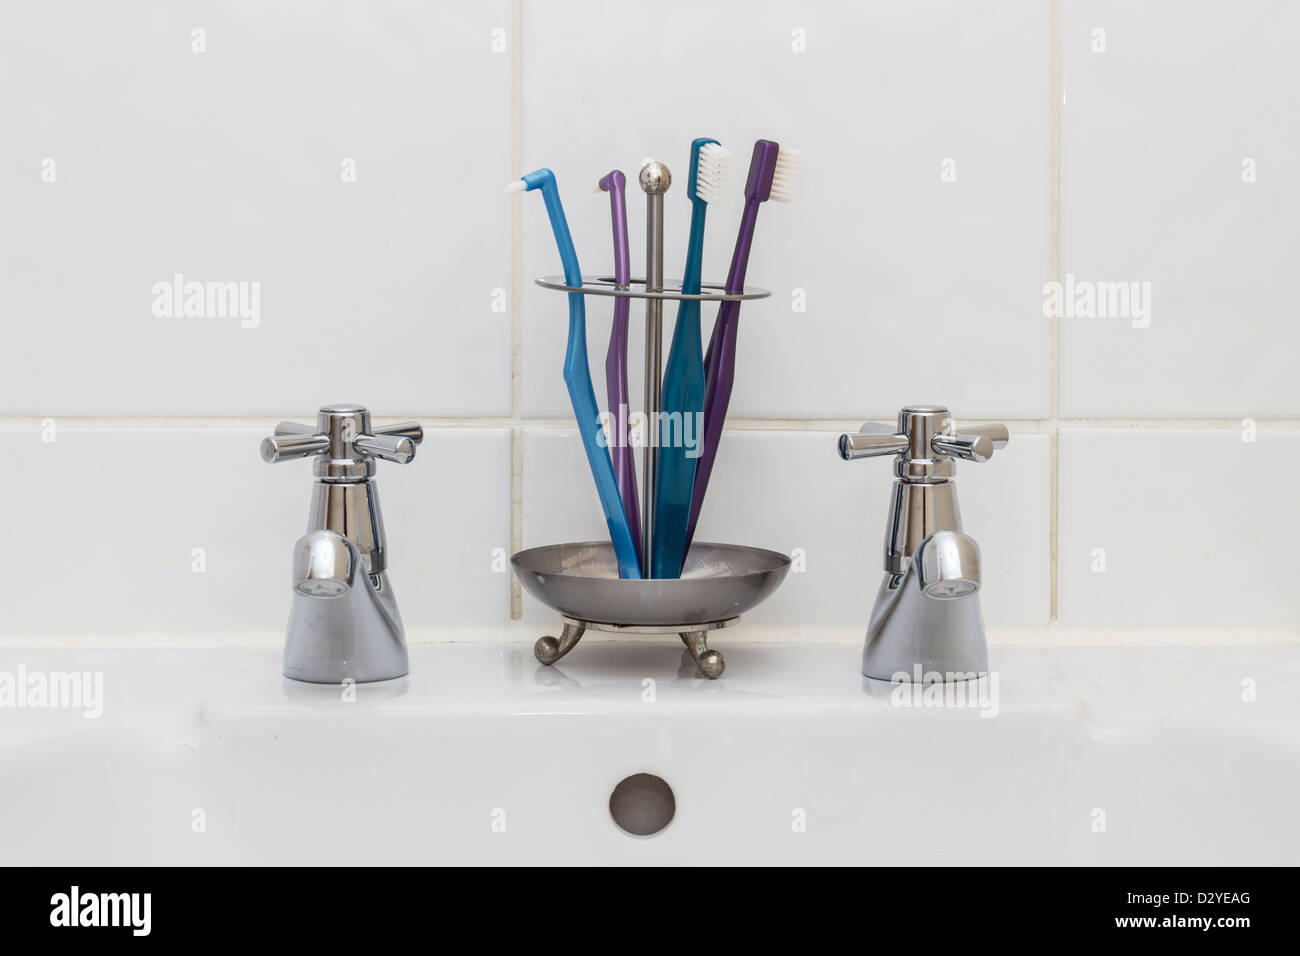 Toothbrushes in bathroom [wop] Stock Photo